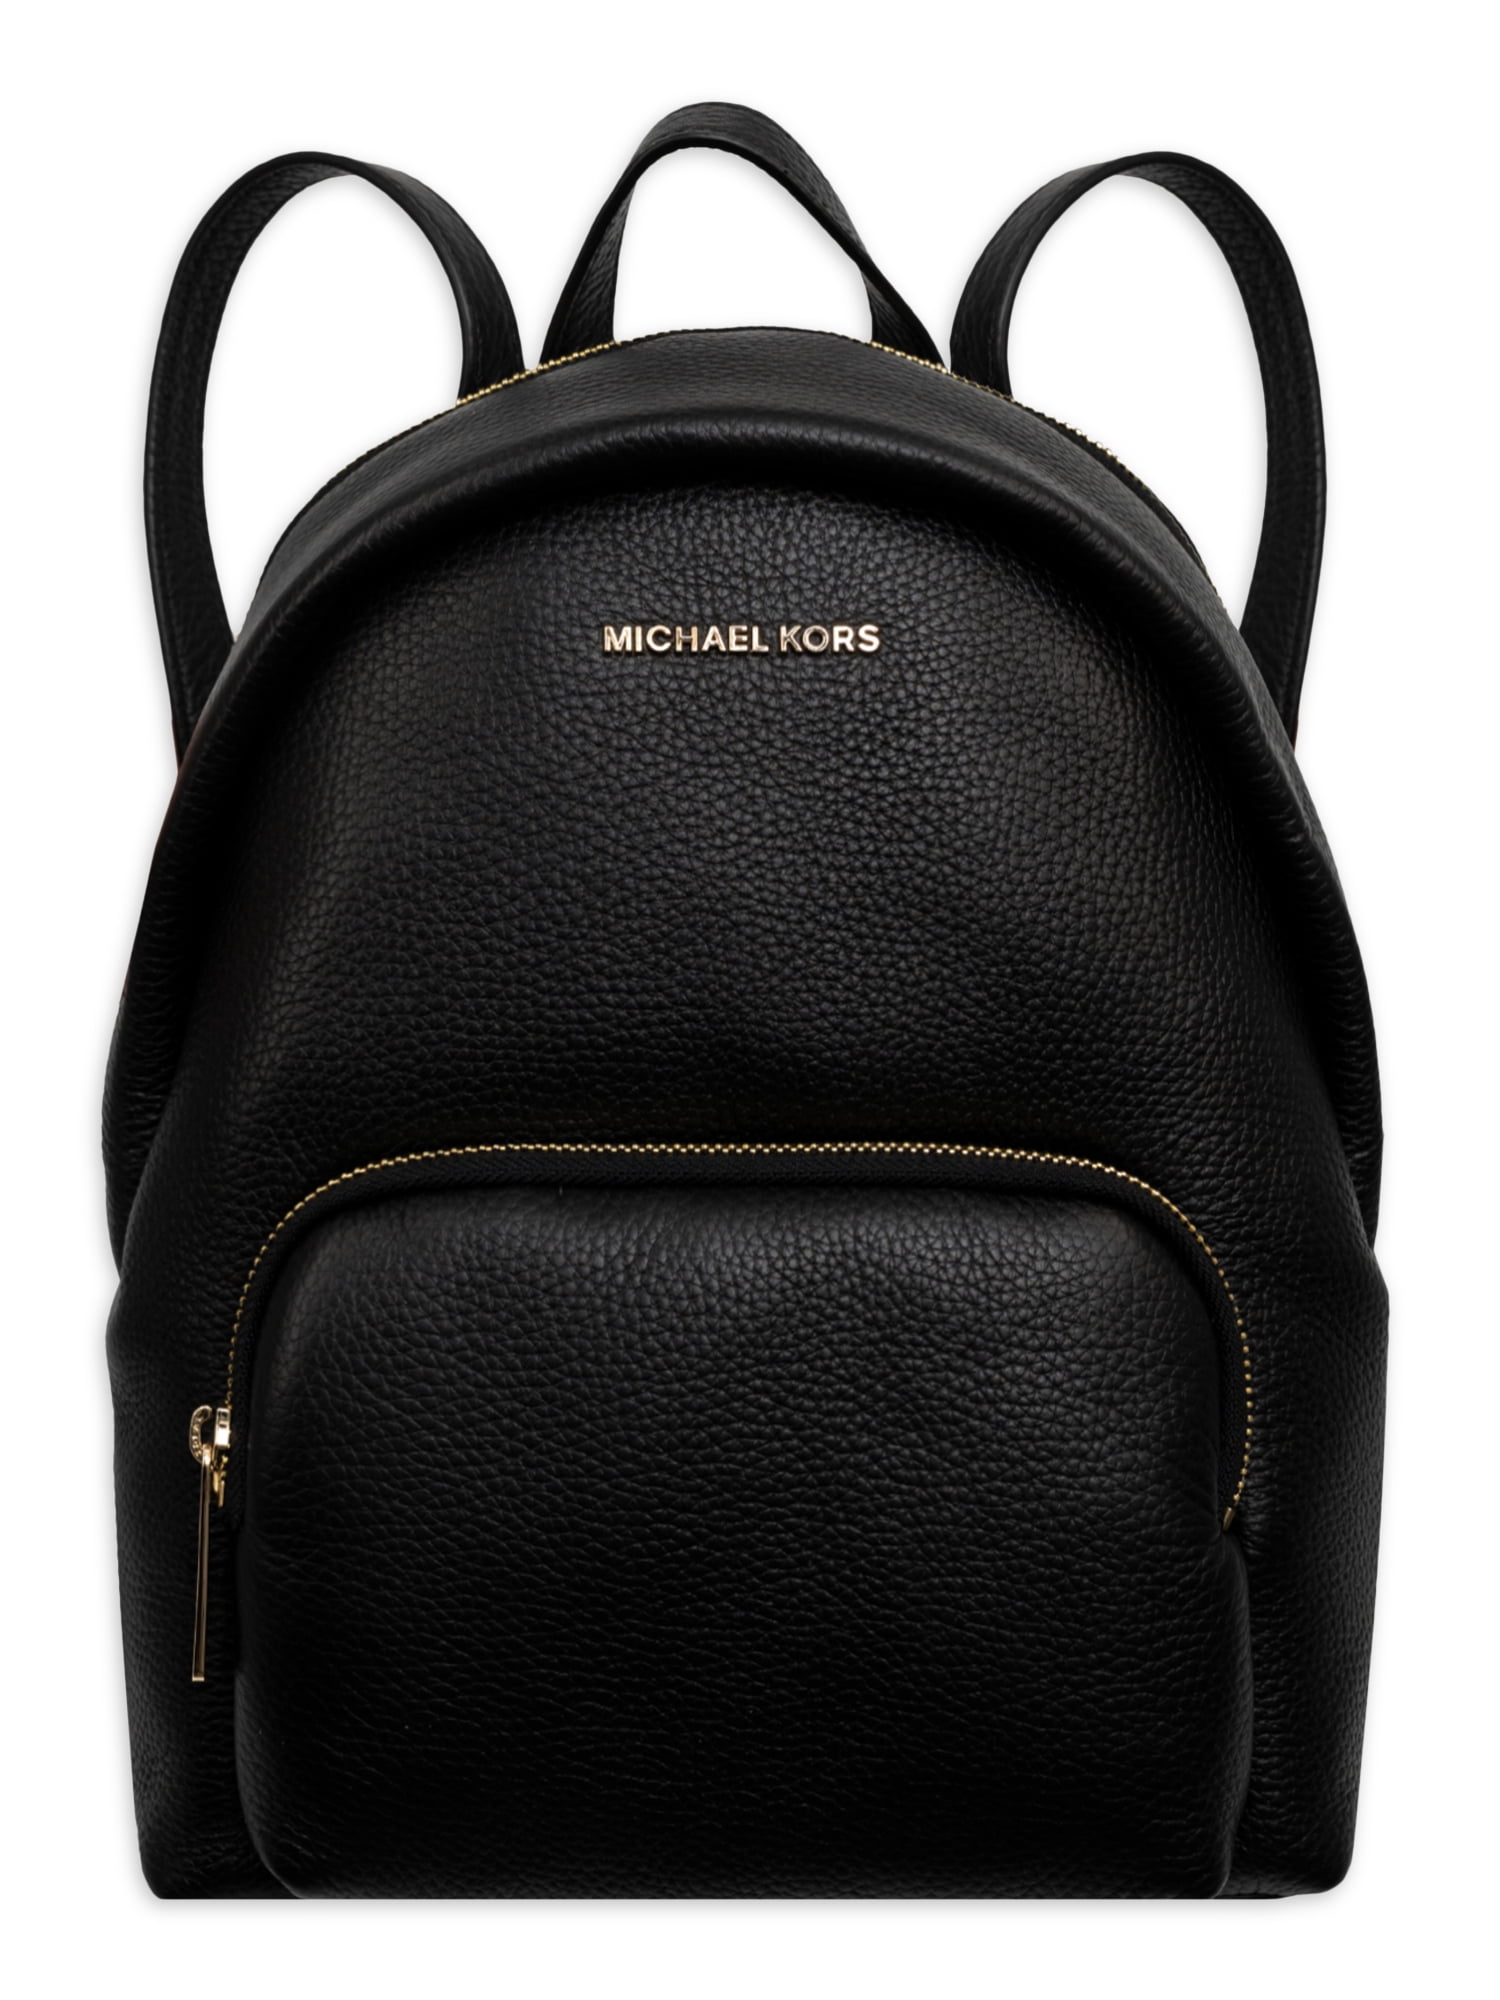 Michael Kors Womens Erin Medium Pebbled Leather Backpack  Black   Walmartcom